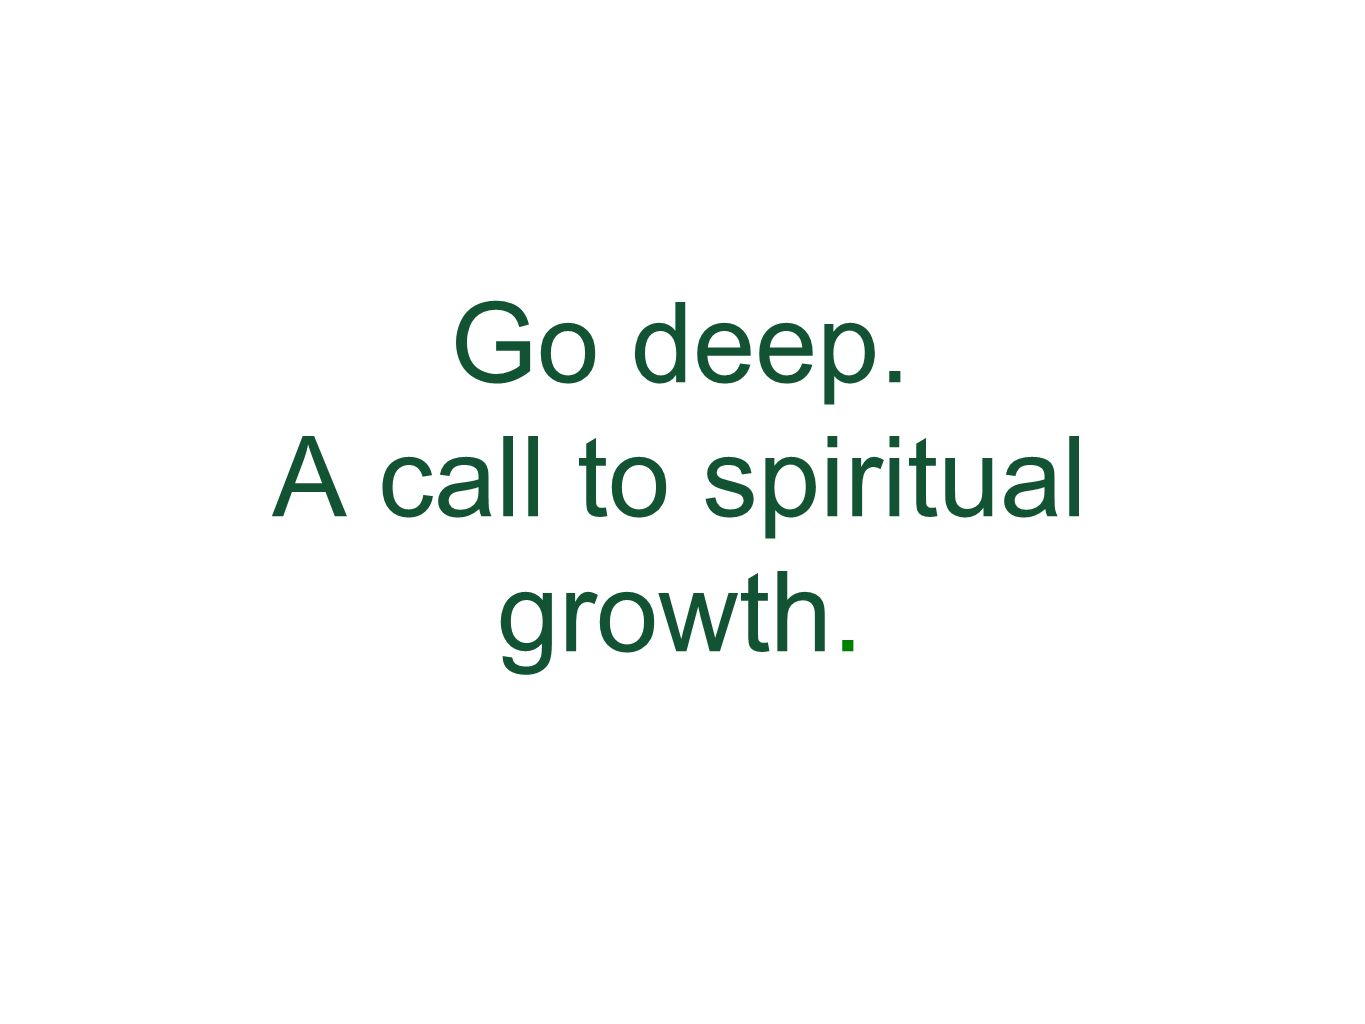 Go deep. A call to spiritual growth.